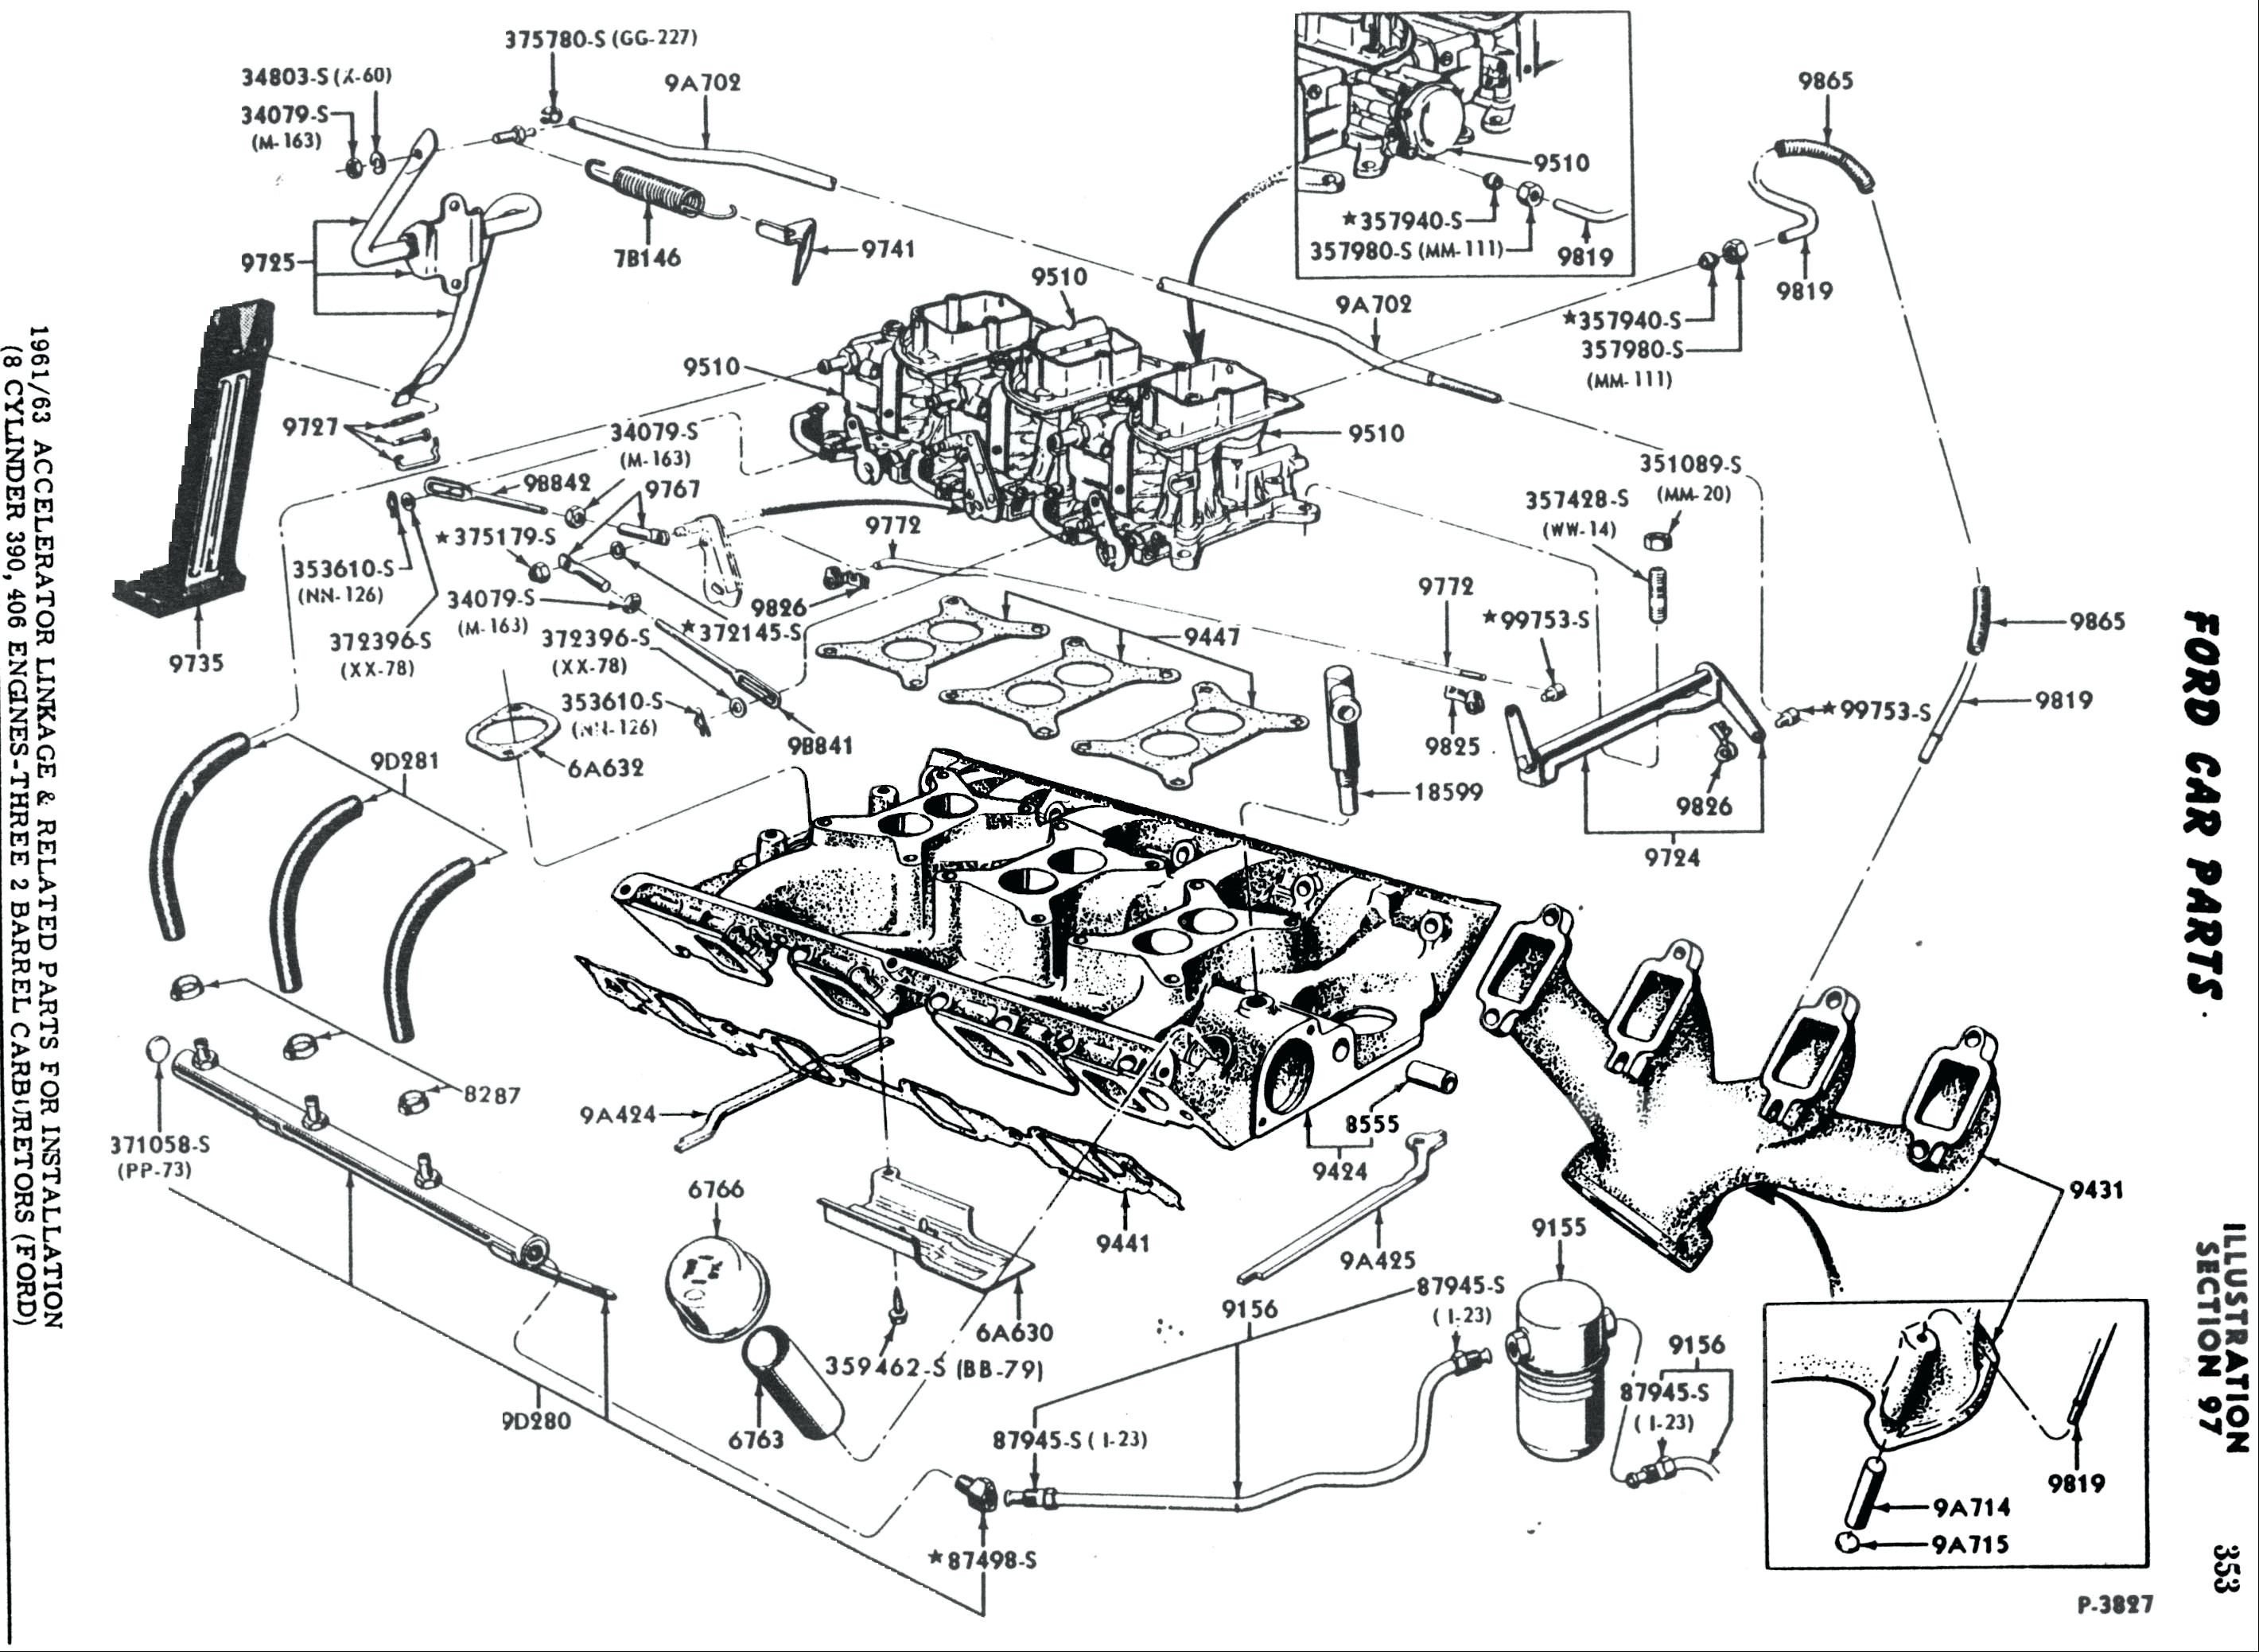 Car Parts Names with Diagram Wrg 7679] Car Engine Schematics Of Car Parts Names with Diagram